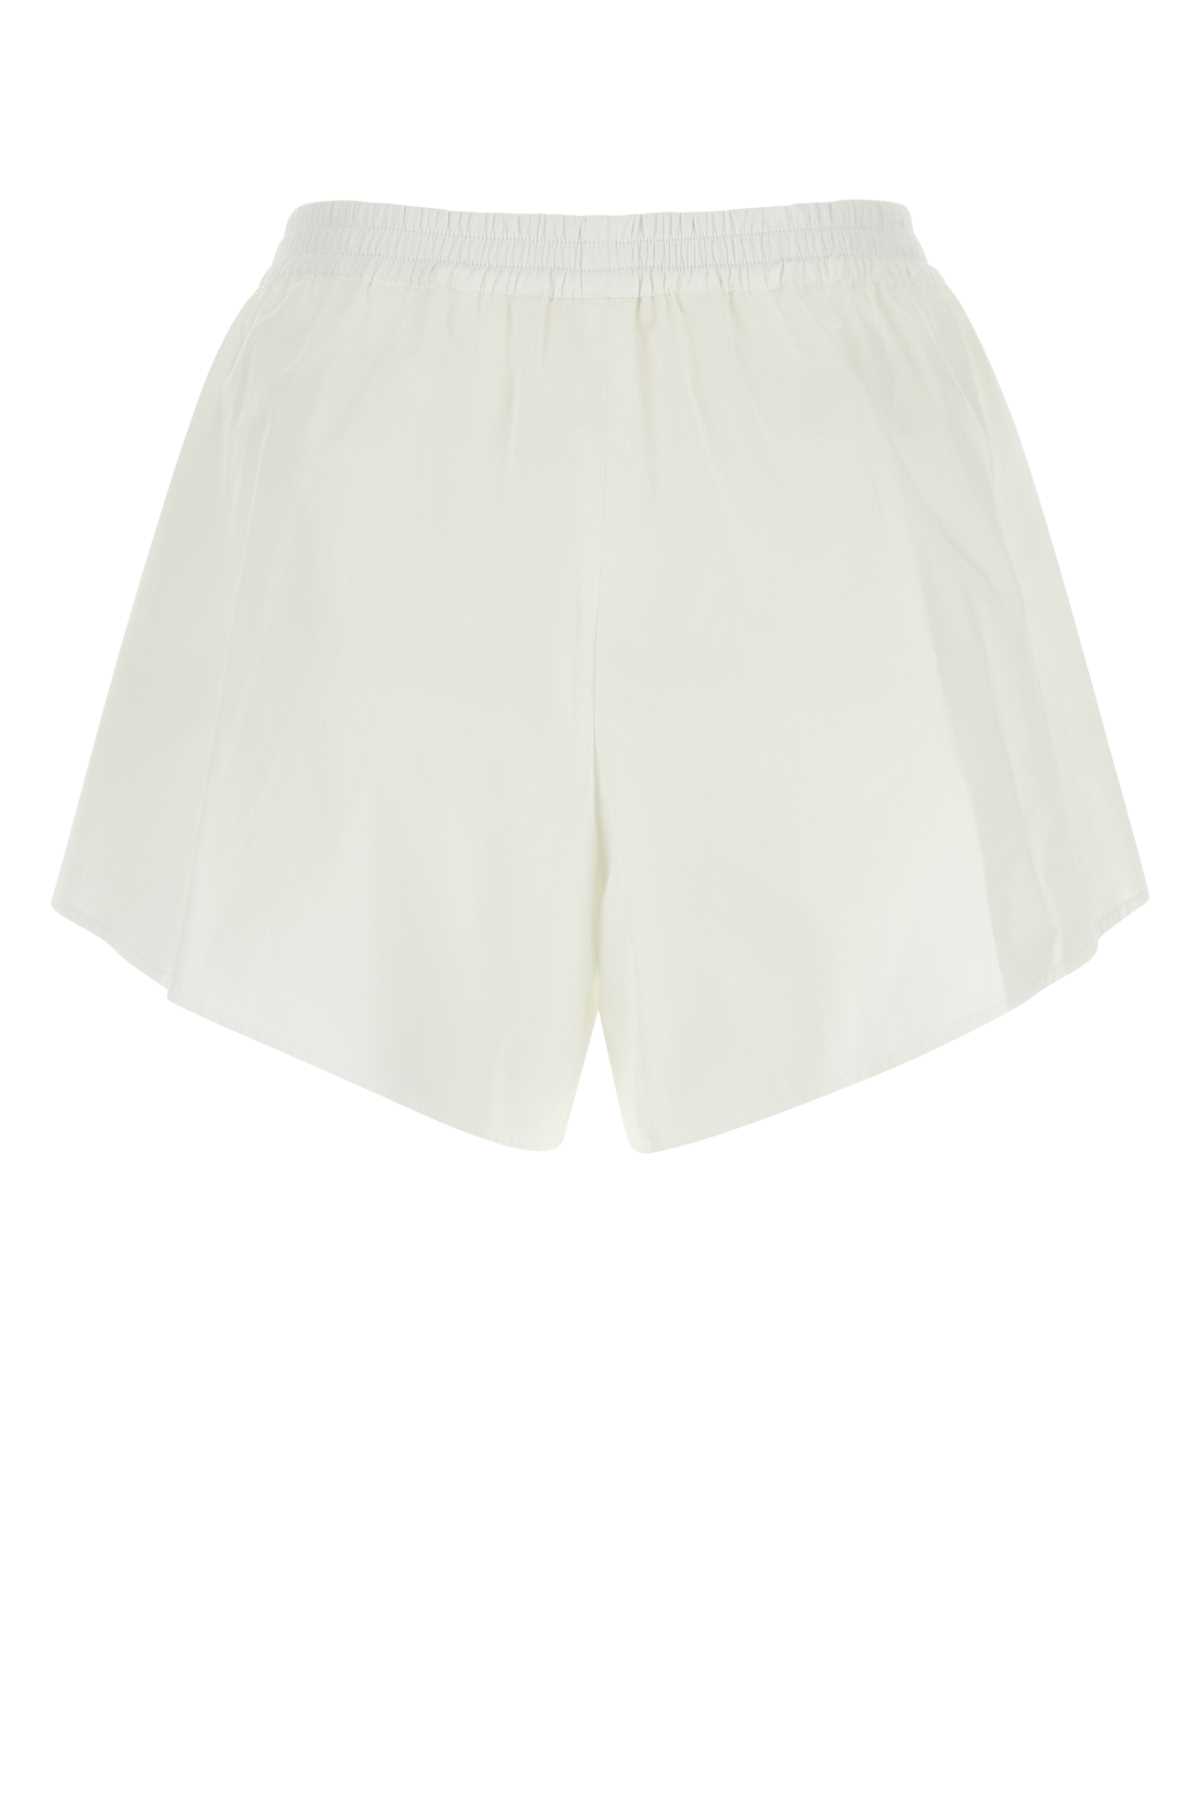 Shop Givenchy White Cotton Shorts